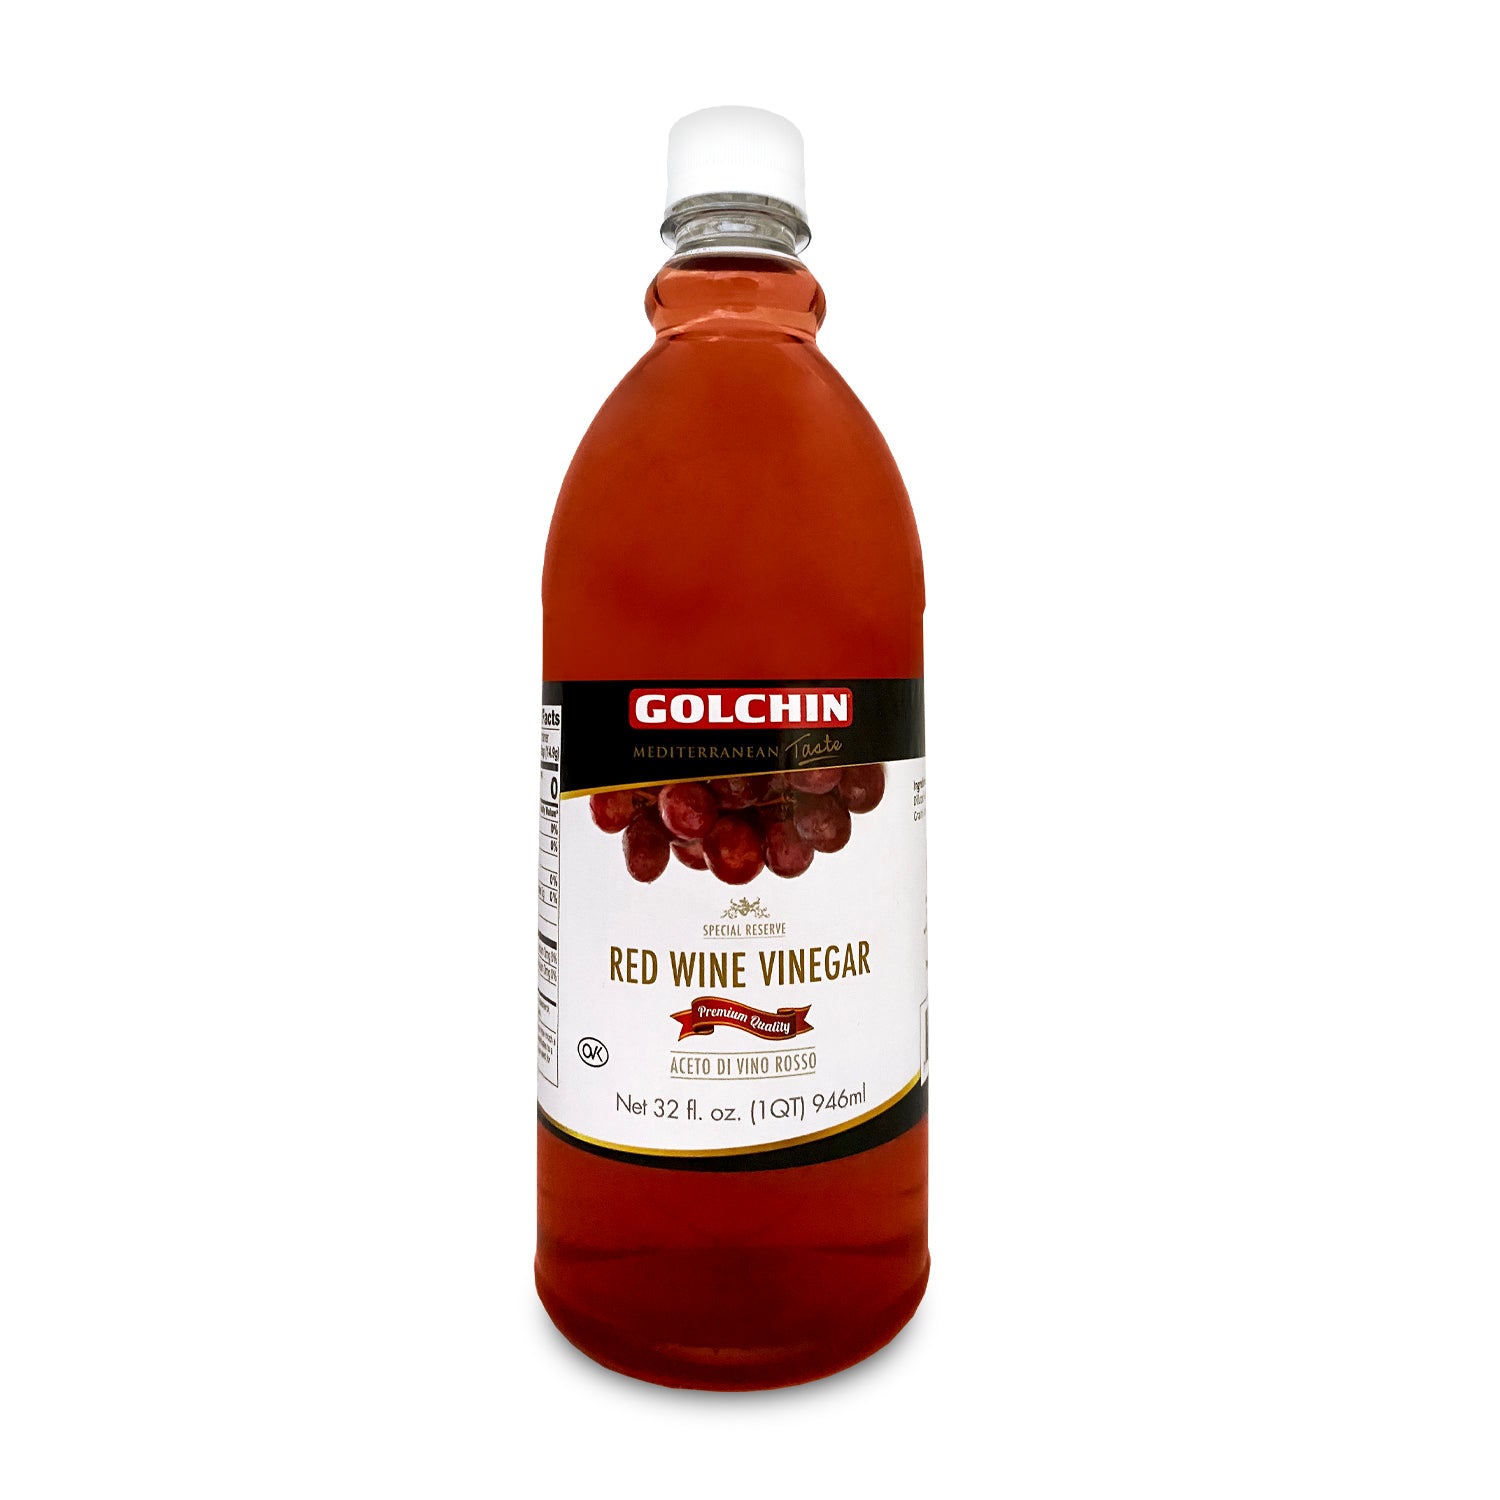 GOLCHIN RED WINE VINEGAR SMALL